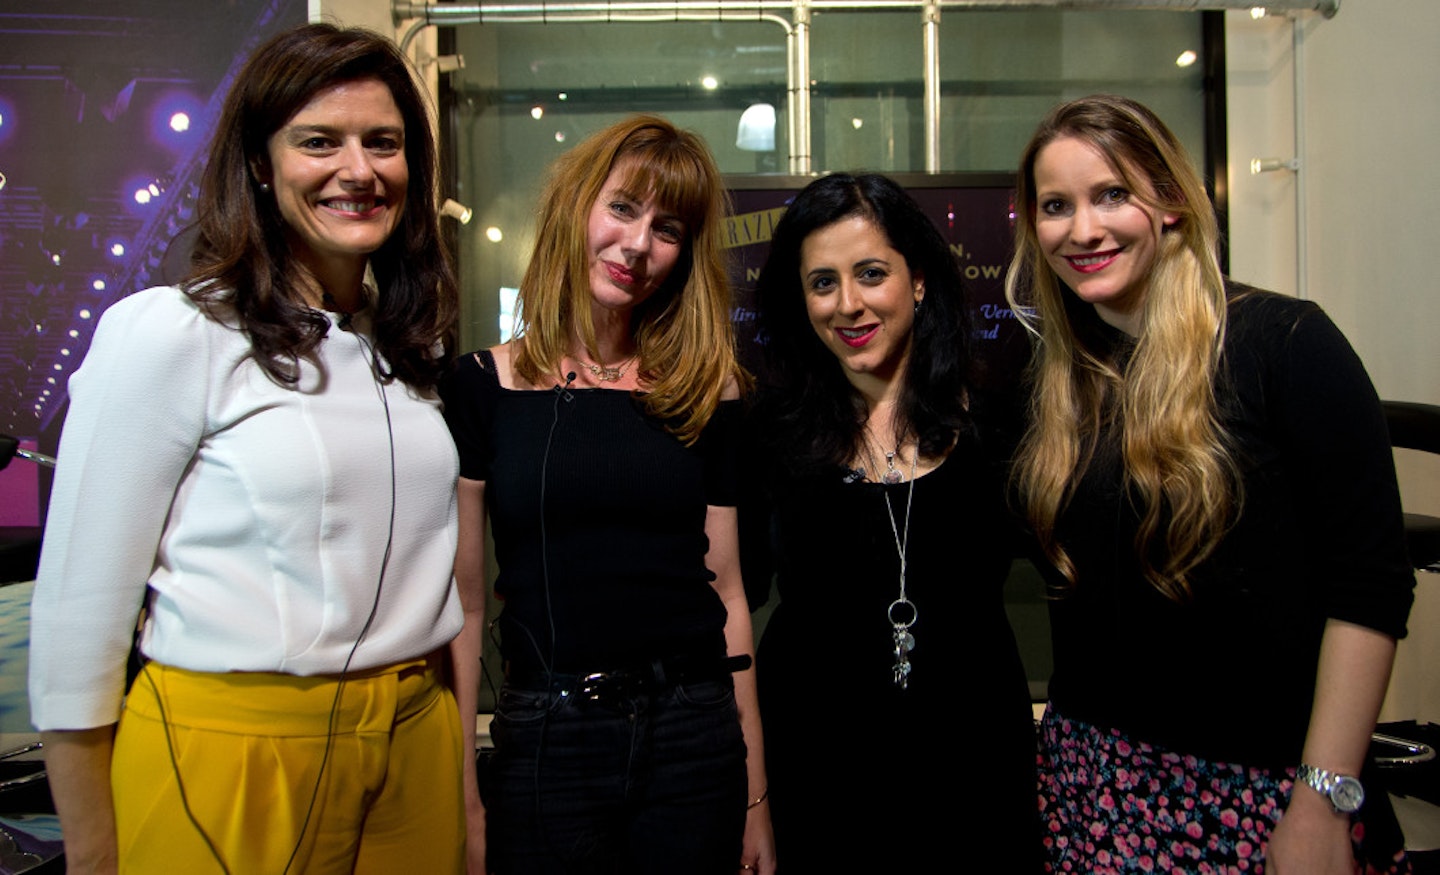 #Grazia10: Panelists Miriam González Durántez, Polly Vernon, Anita Anand and Laura Bates